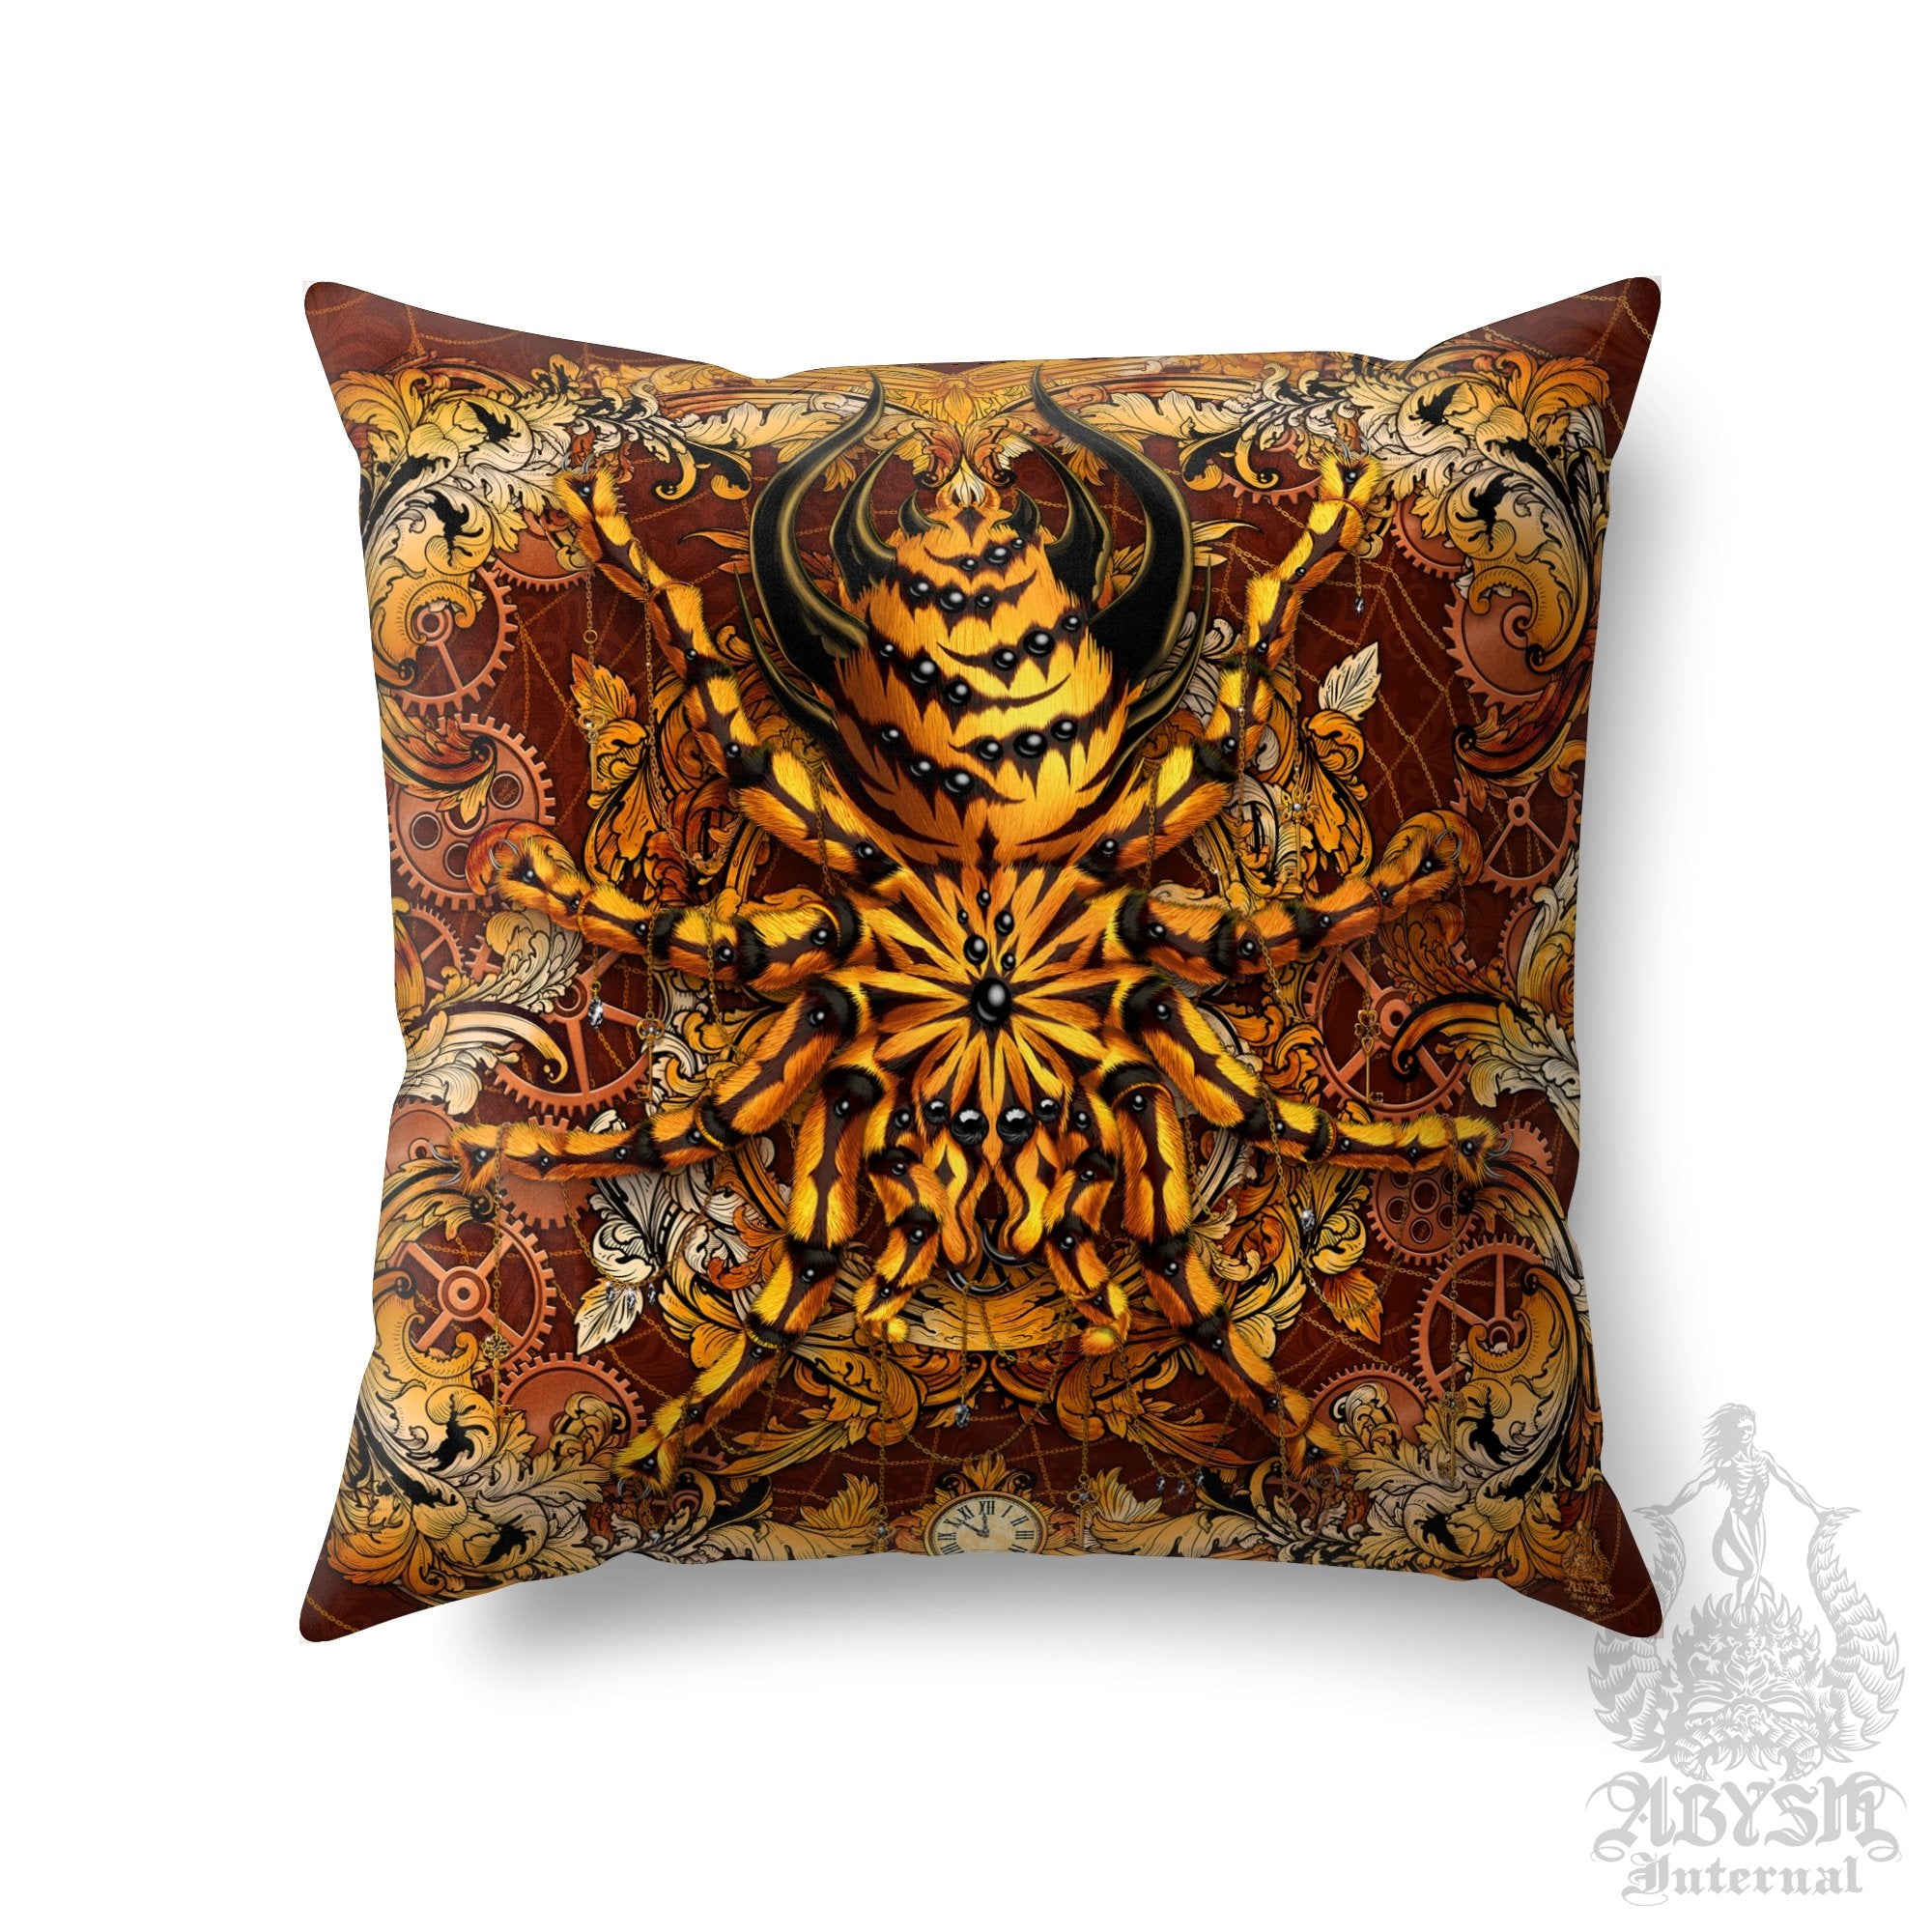 Steampunk Throw Pillow, Decorative Accent Cushion, Baroque Room Decor - Tarantula Spider - Abysm Internal